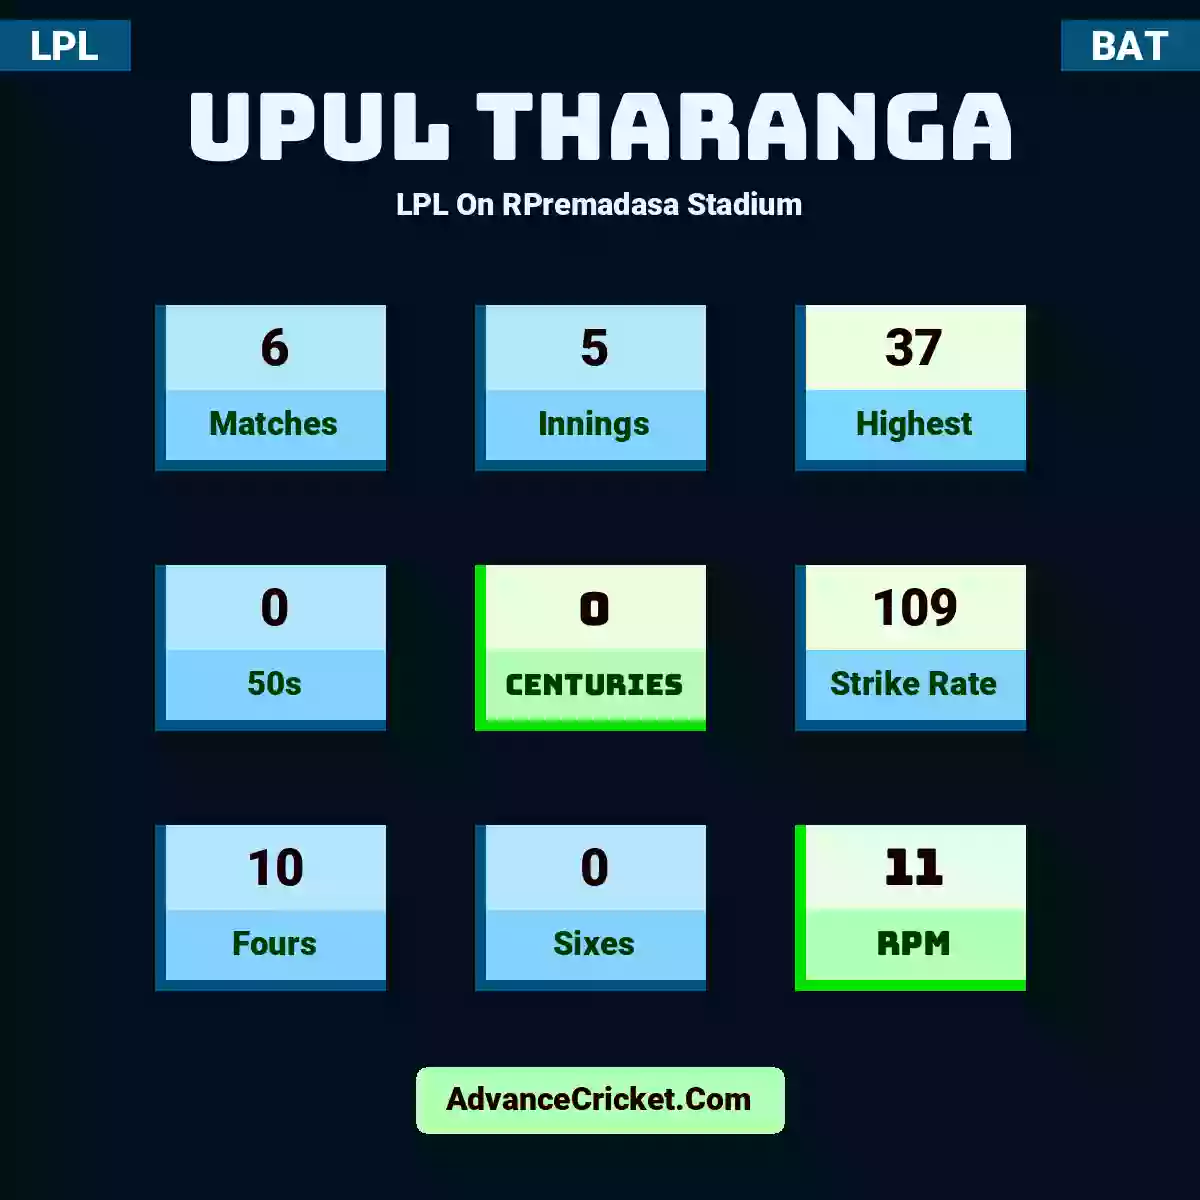 Upul Tharanga LPL  On RPremadasa Stadium, Upul Tharanga played 6 matches, scored 37 runs as highest, 0 half-centuries, and 0 centuries, with a strike rate of 109. U.Tharanga hit 10 fours and 0 sixes, with an RPM of 11.